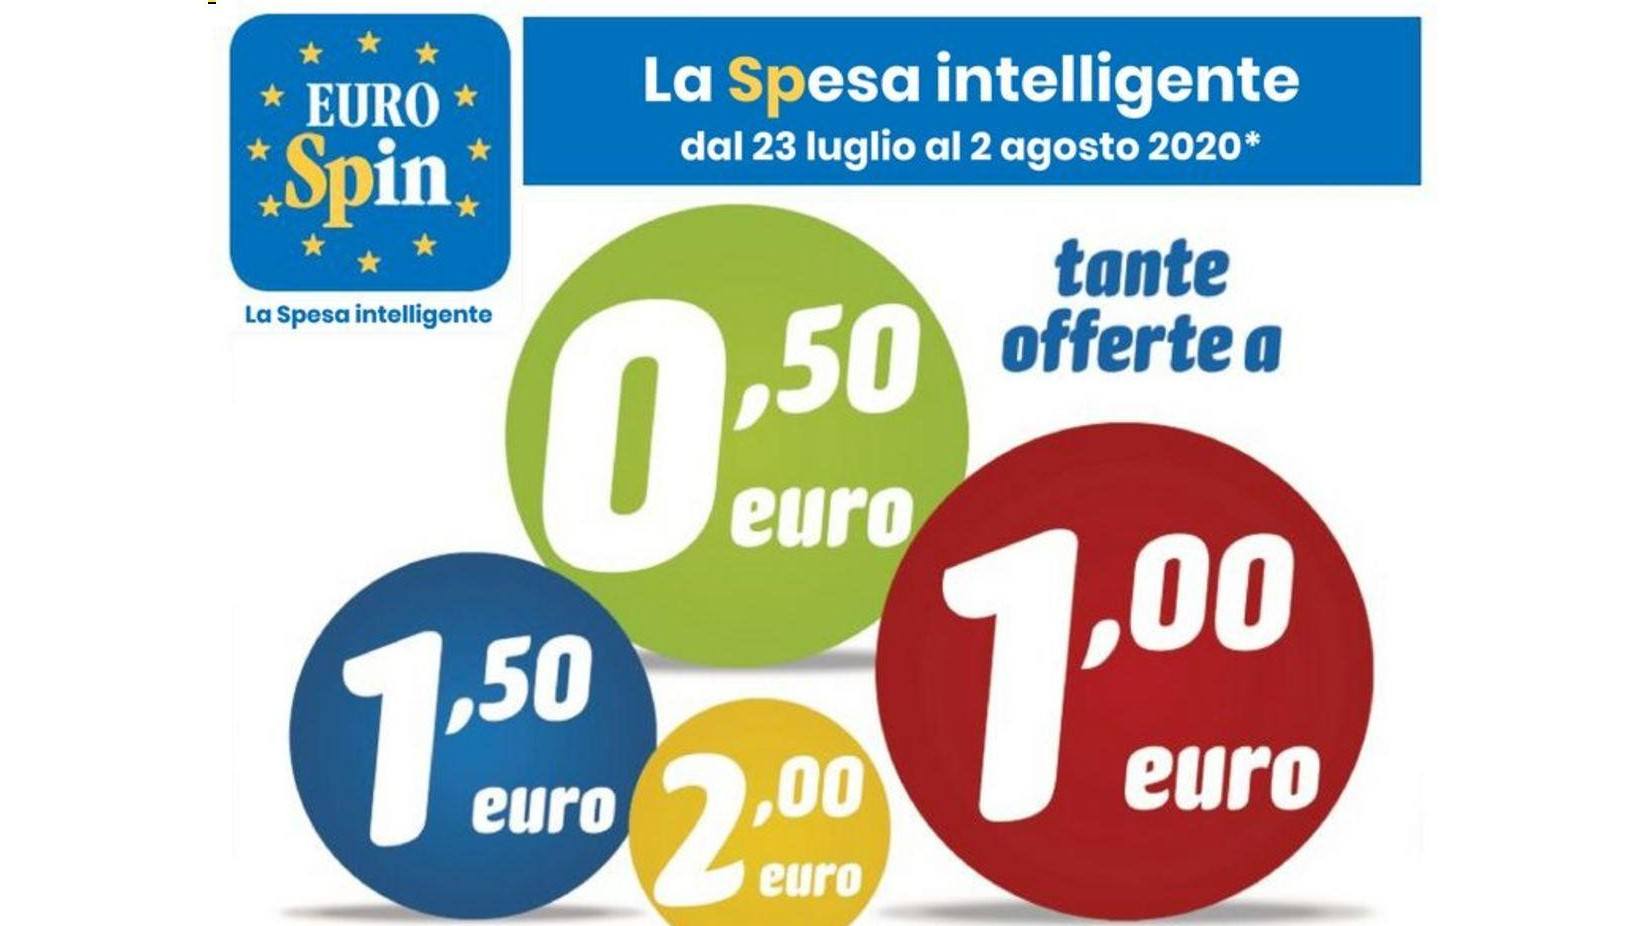 Anteprima Volantino Eurospin valido dal 23-07 al 02-08 2020